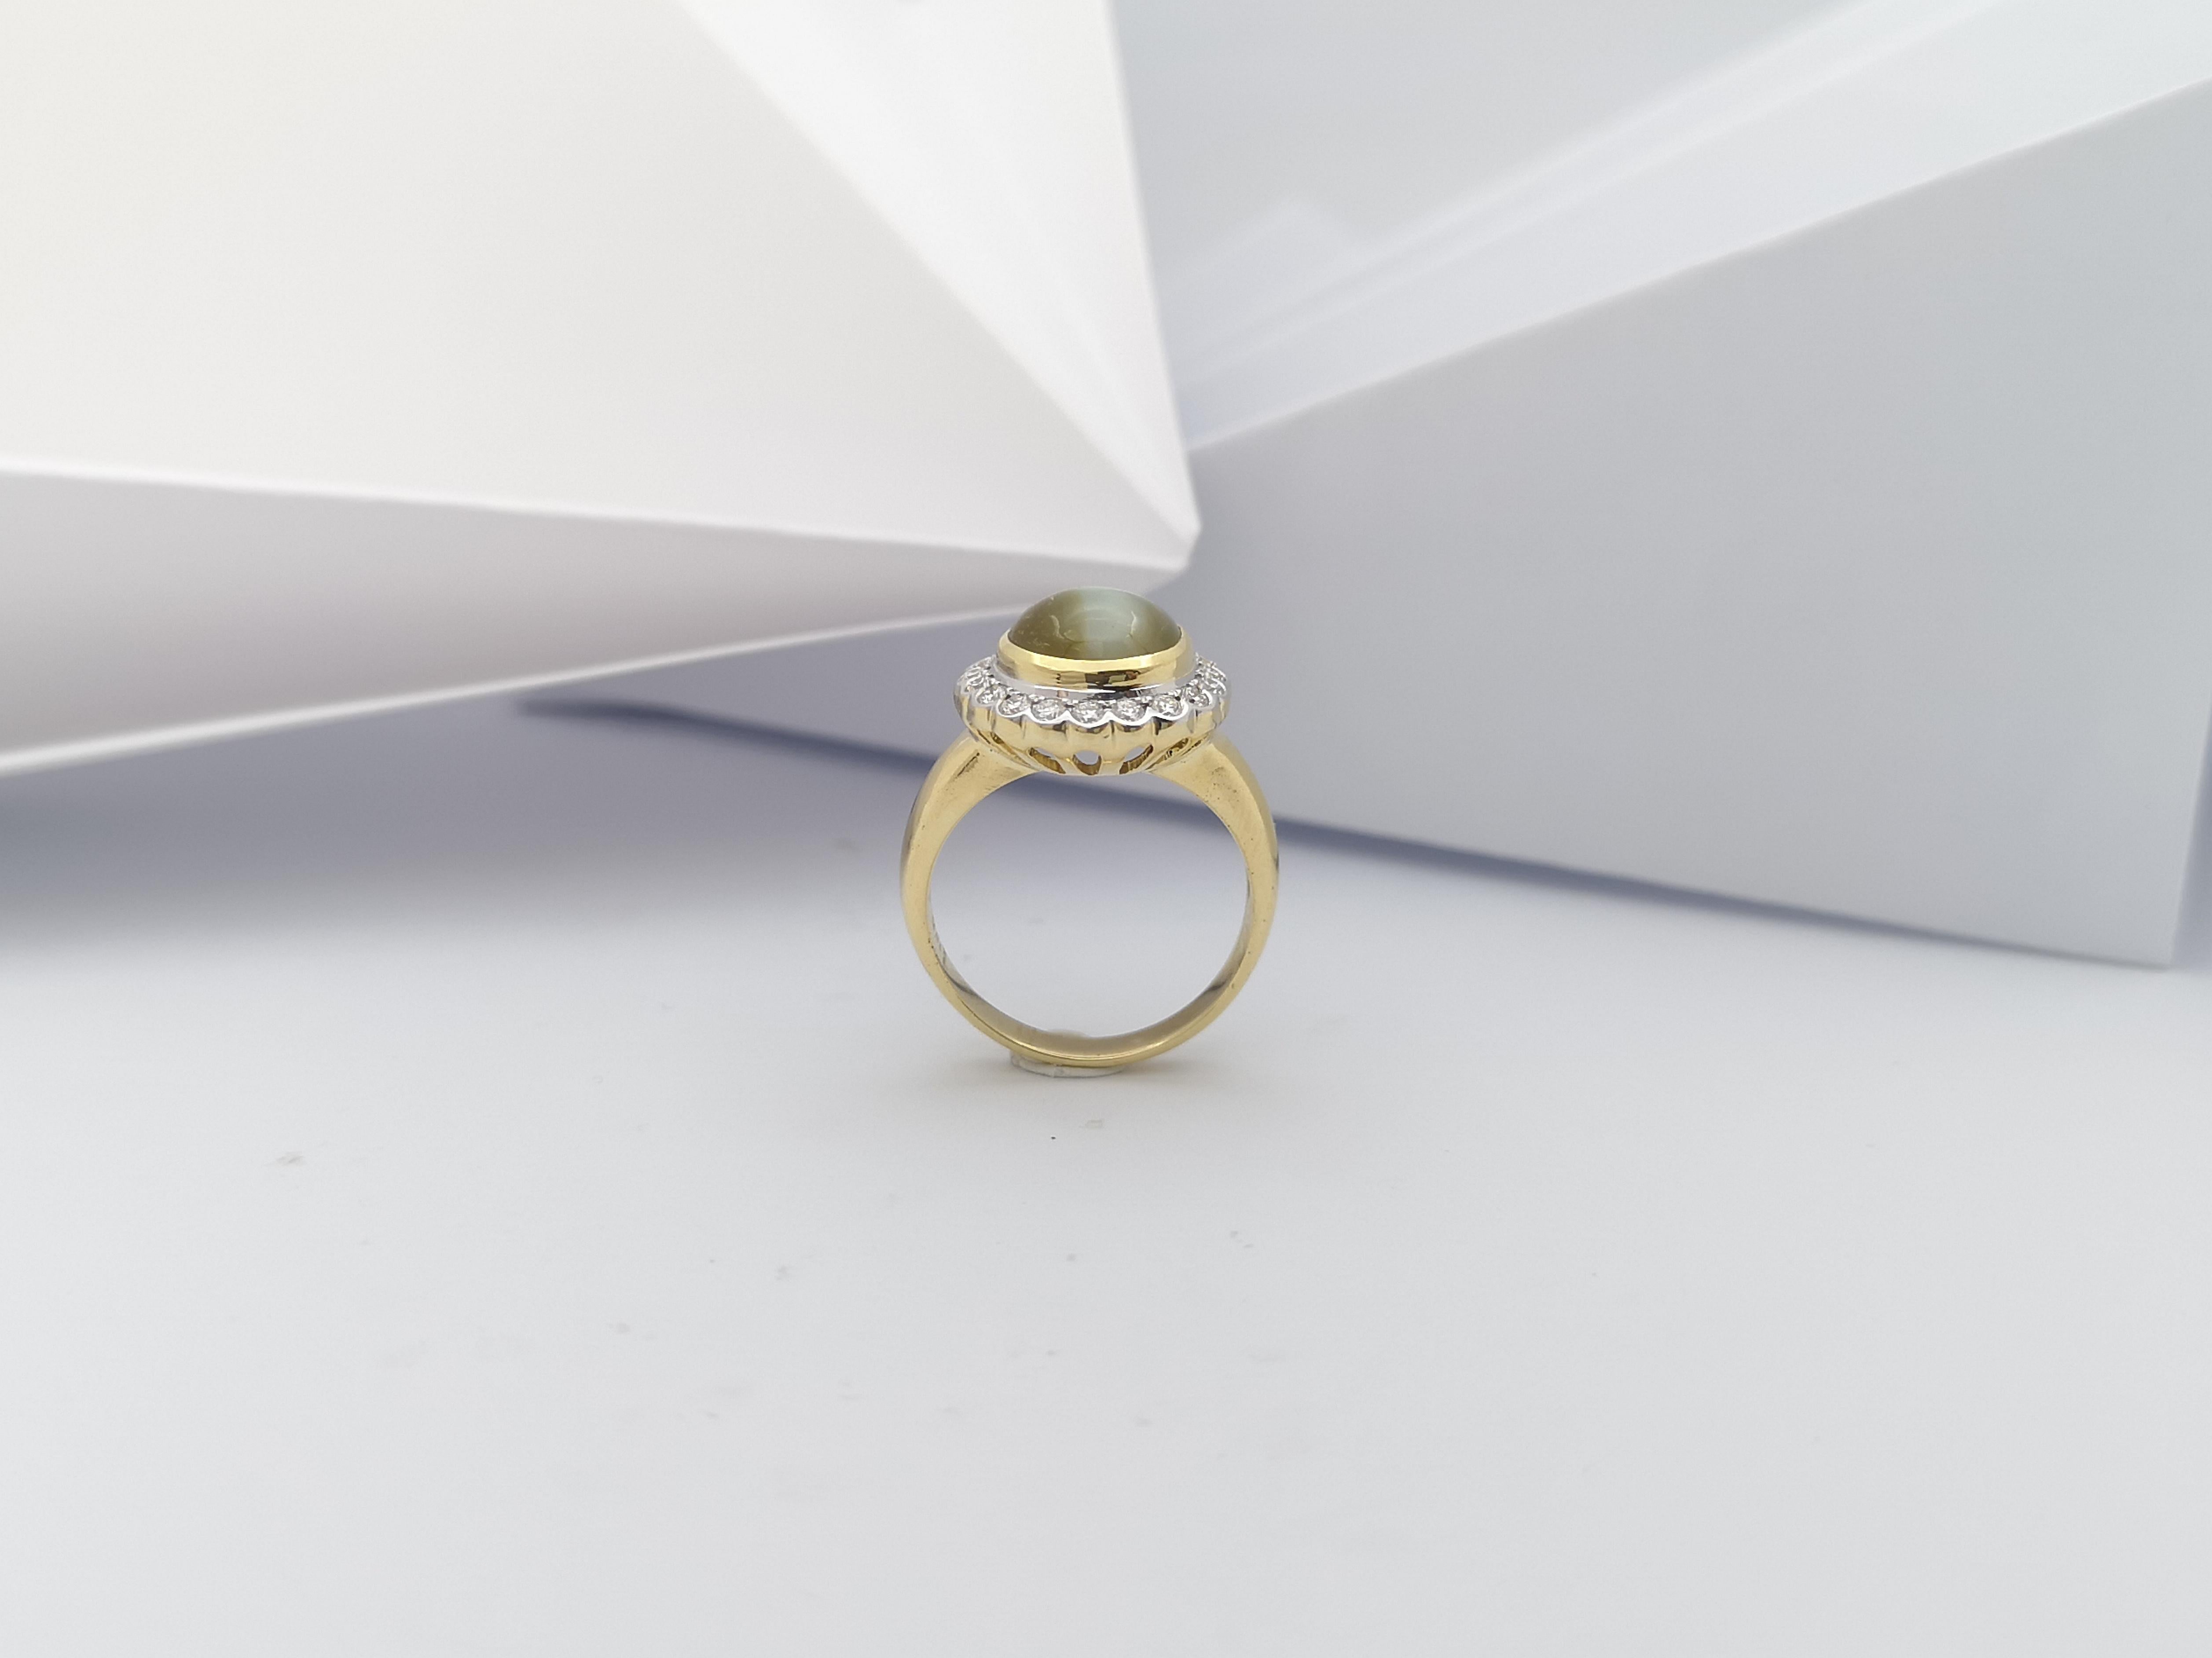 Chrysoberyl Cat's Eye with Diamond Ring Set in 18 Karat Gold For Sale 1